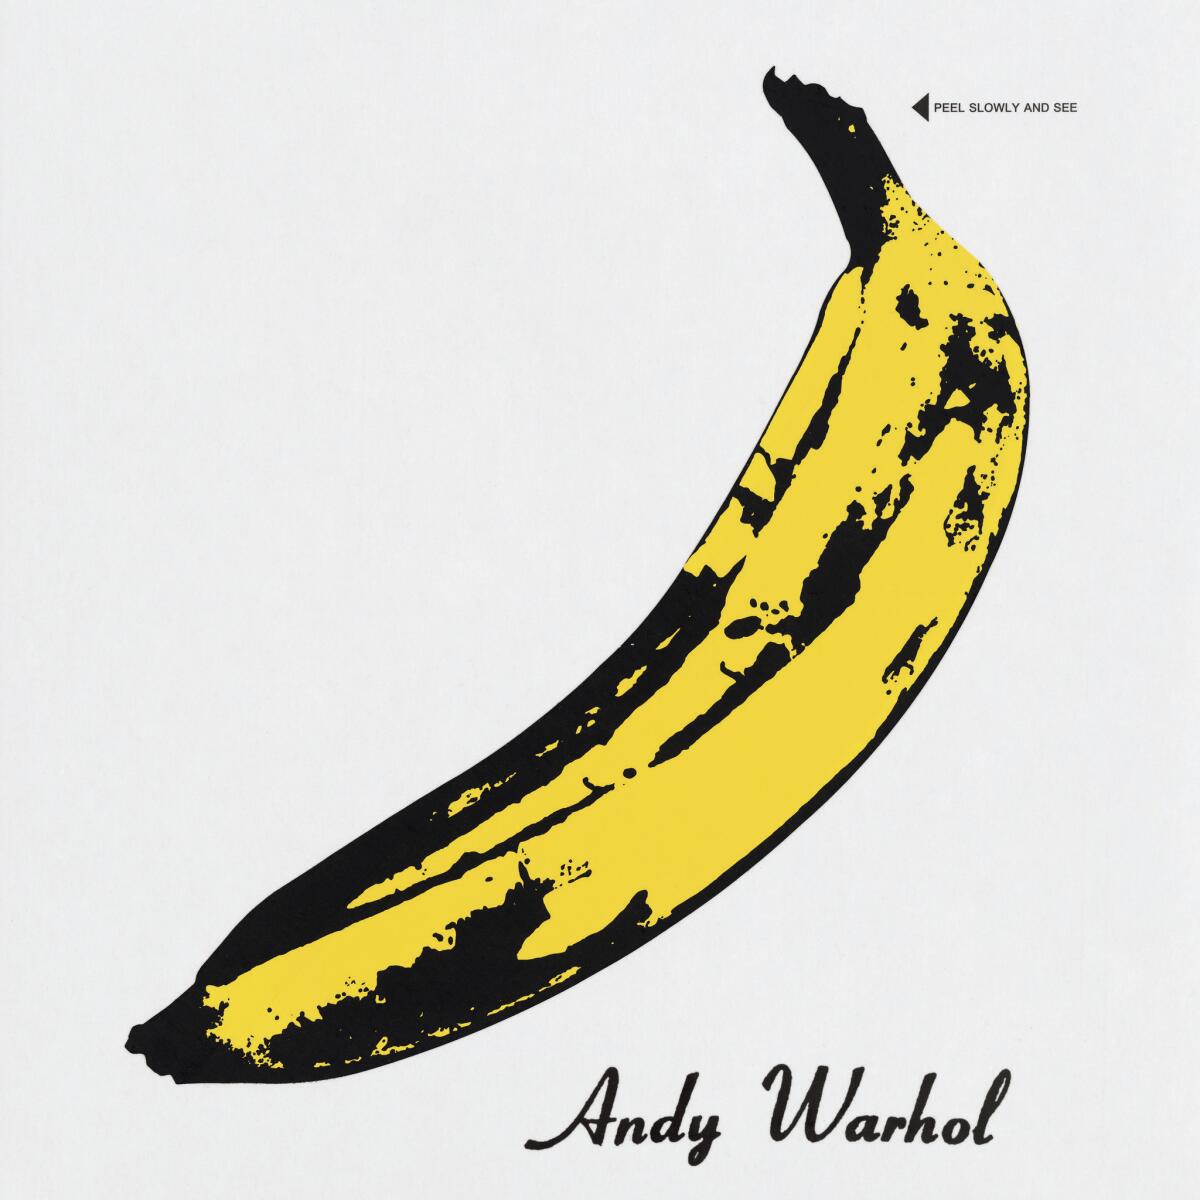 Andy Warhol for the Velvet Underground and Nico, 1967 (Taschen)